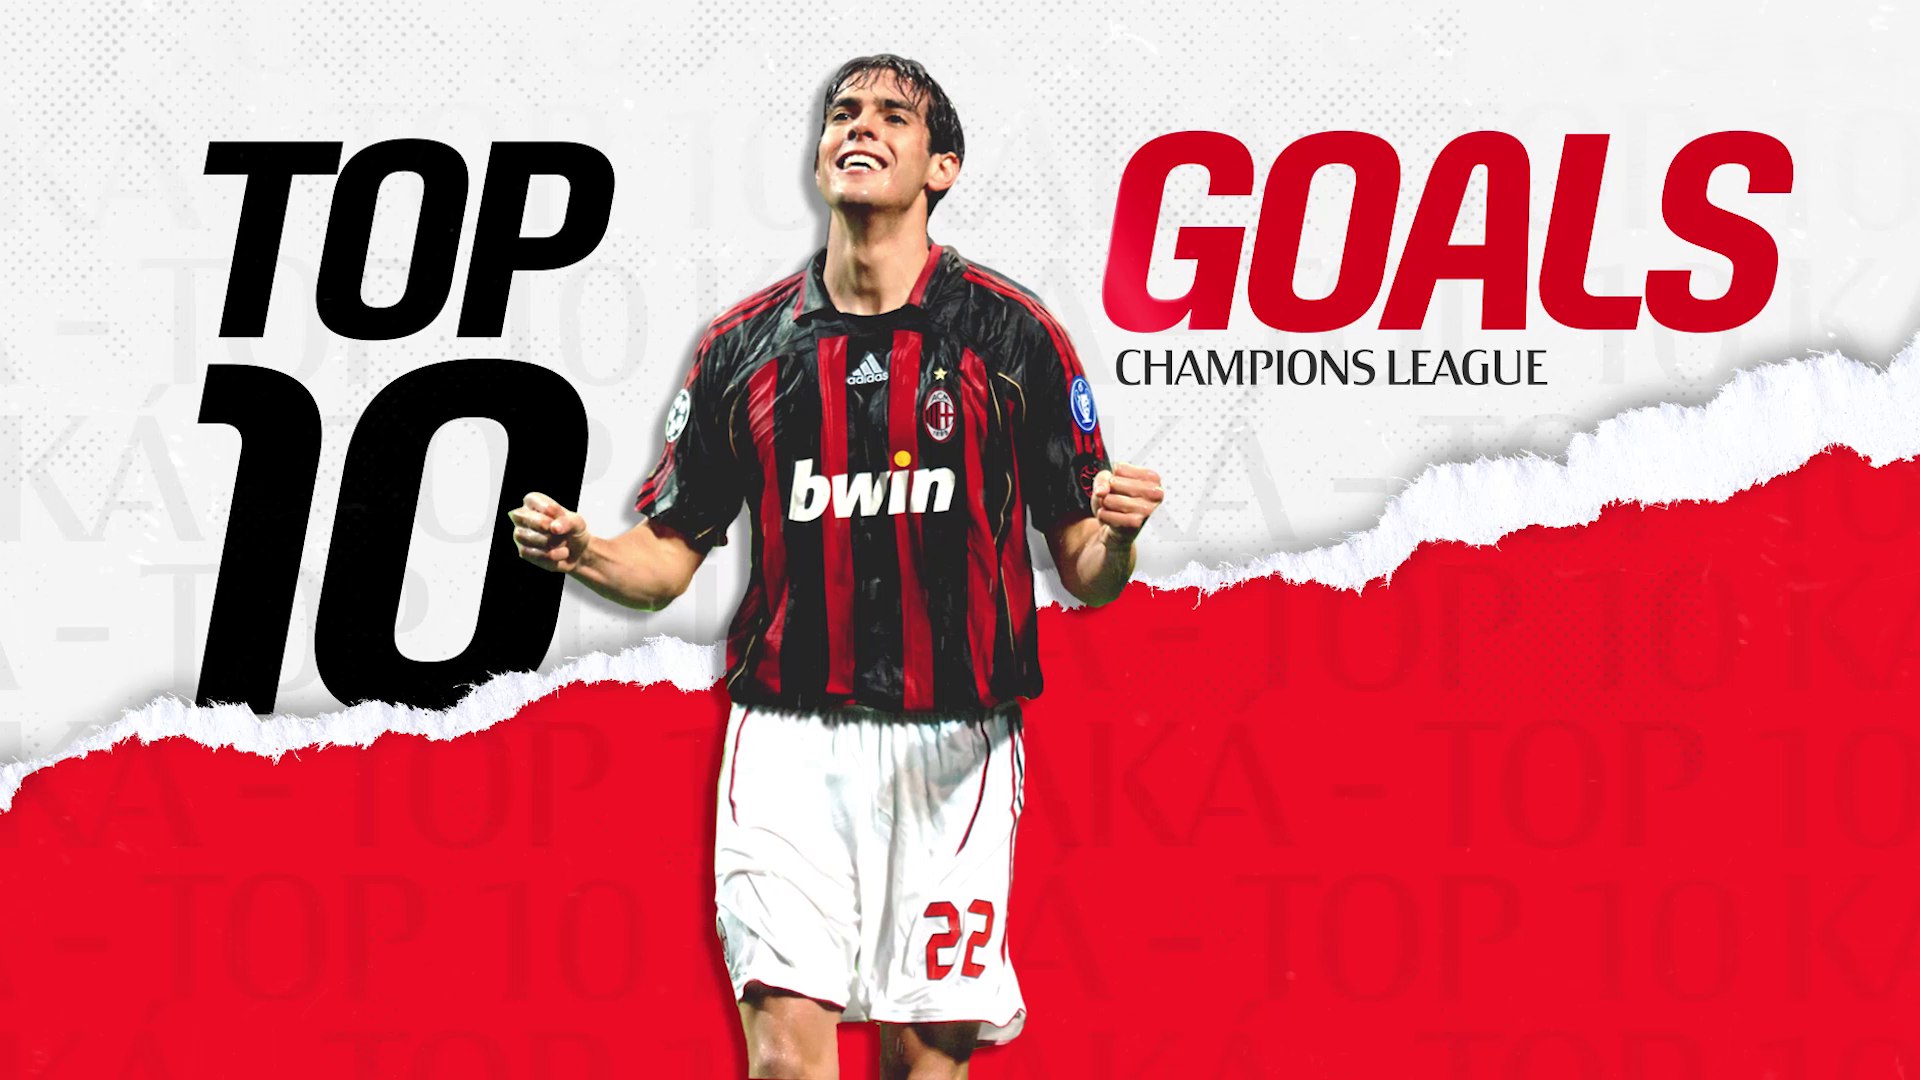 Champions League: la Top 10 Goals di Kaká - video Dailymotion